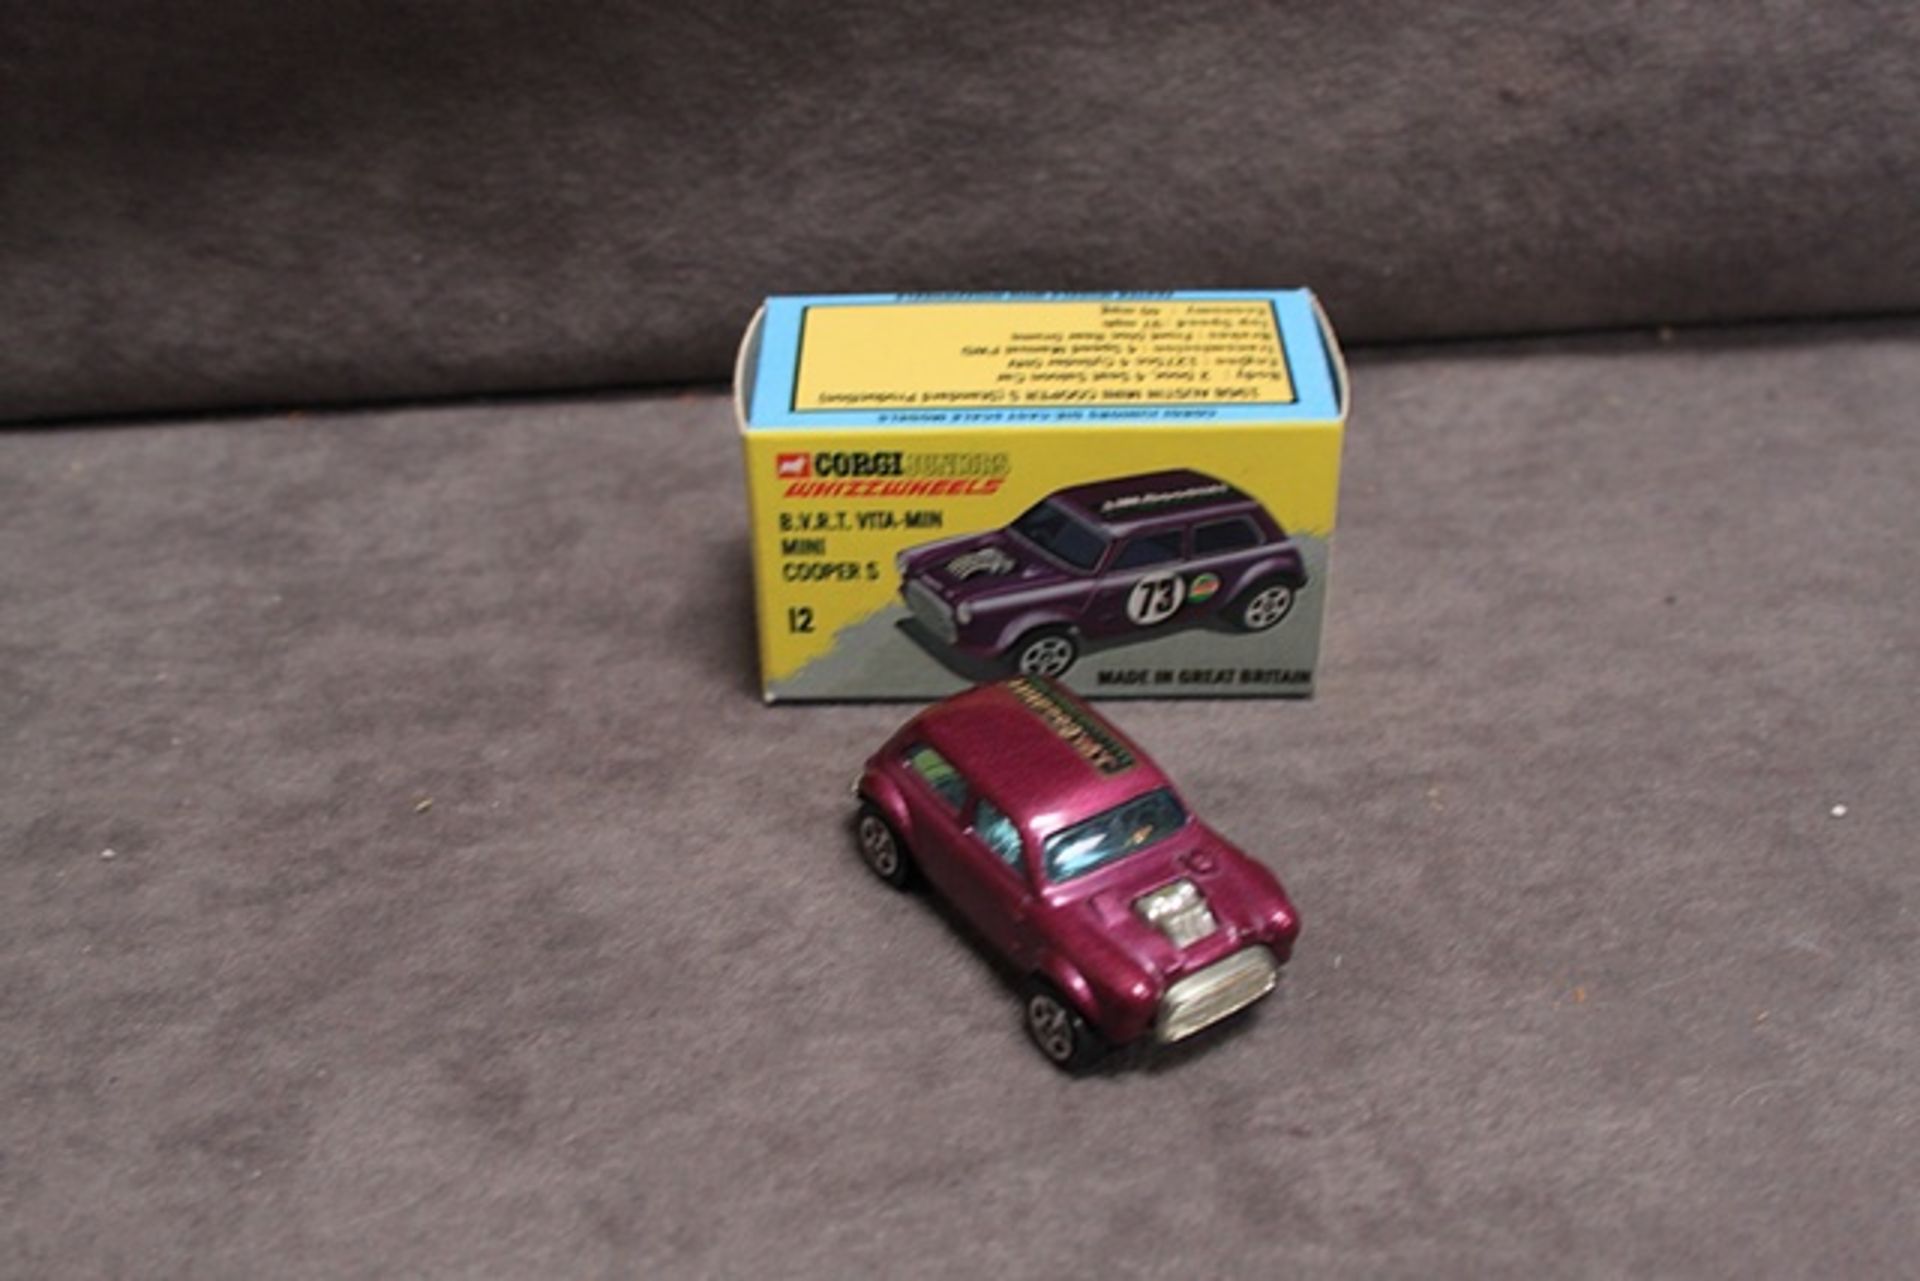 Mint Corgi WhizzWheels diecast #12 BVRT Vita-Min Mini Cooper S in purple in 'Code 2' manufactured - Image 3 of 3